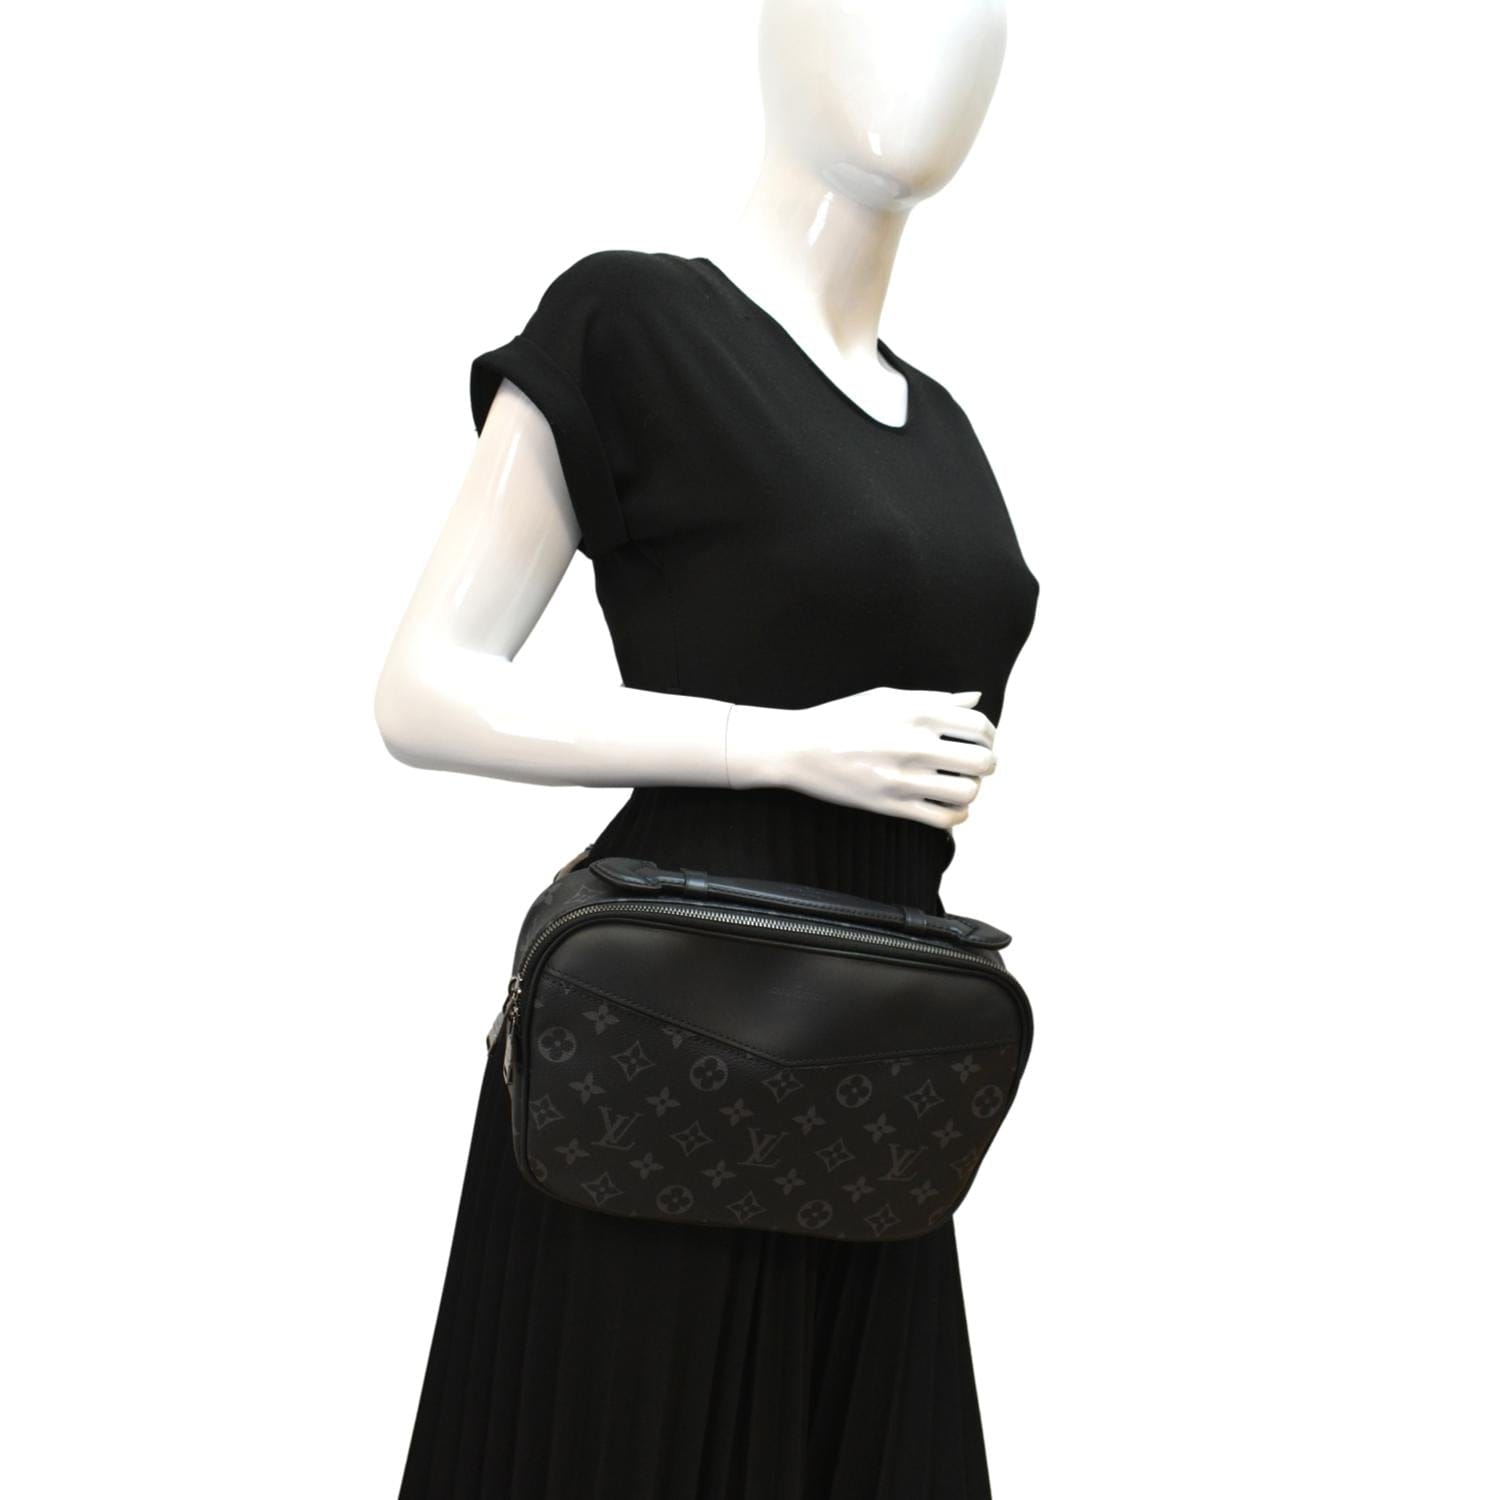 Louis Vuitton Discovery Bumbag PM Monogram Eclipse Belt Bag Purse Handbag